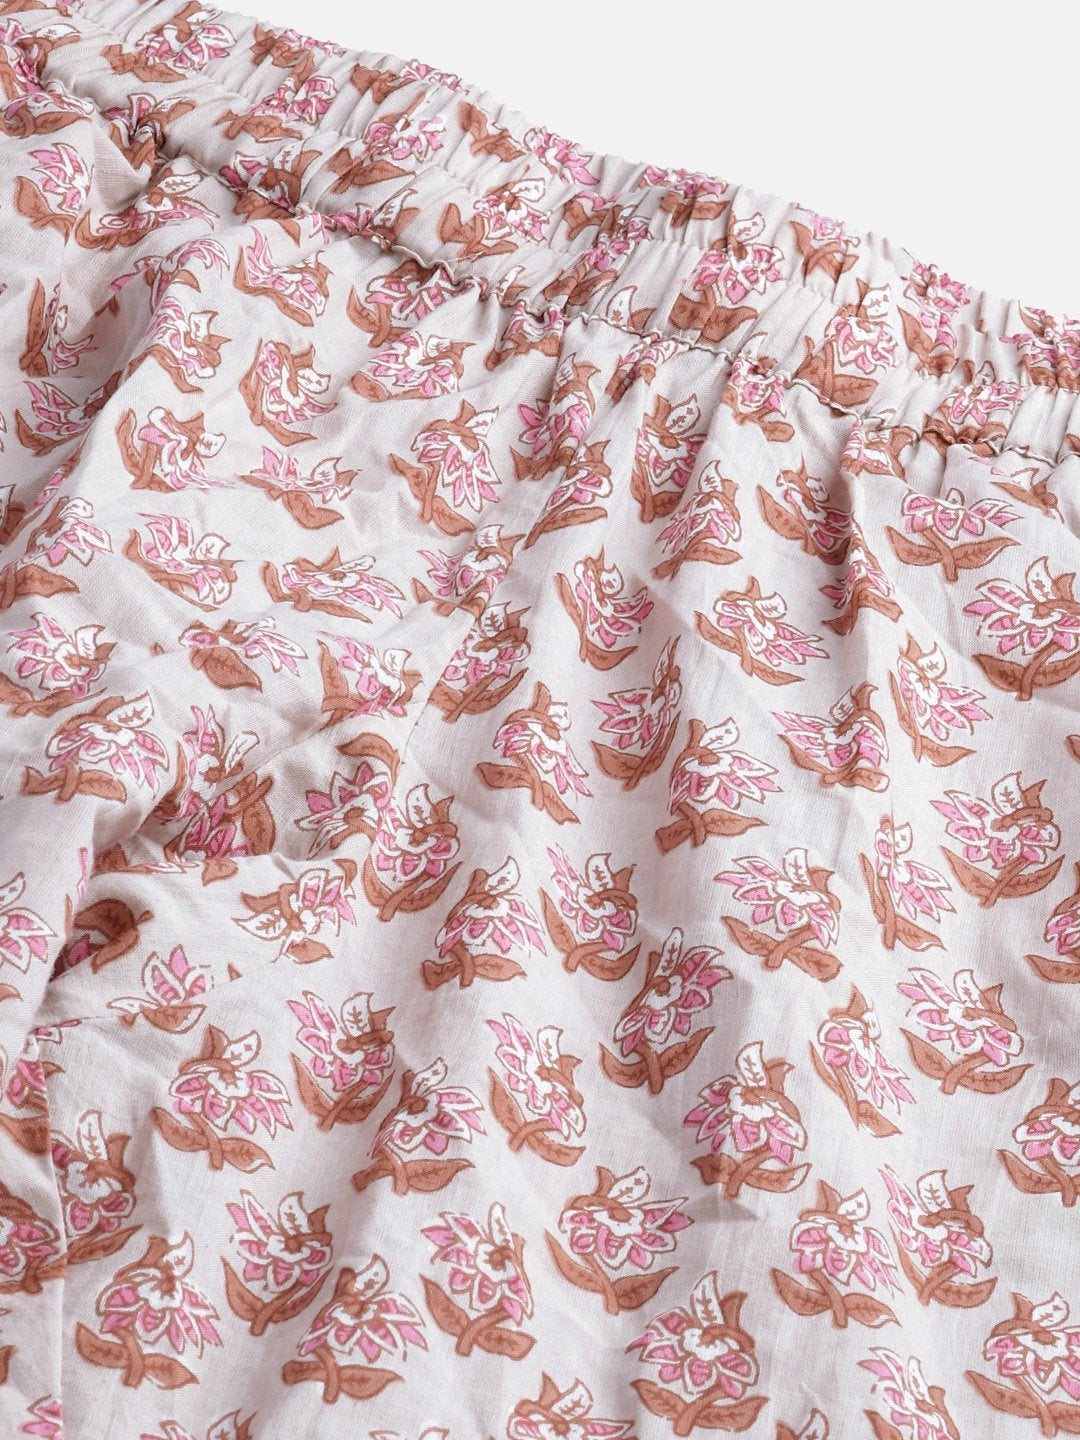 Women's Floral Pink Motif Cotton Nightsuit  - Wahenoor